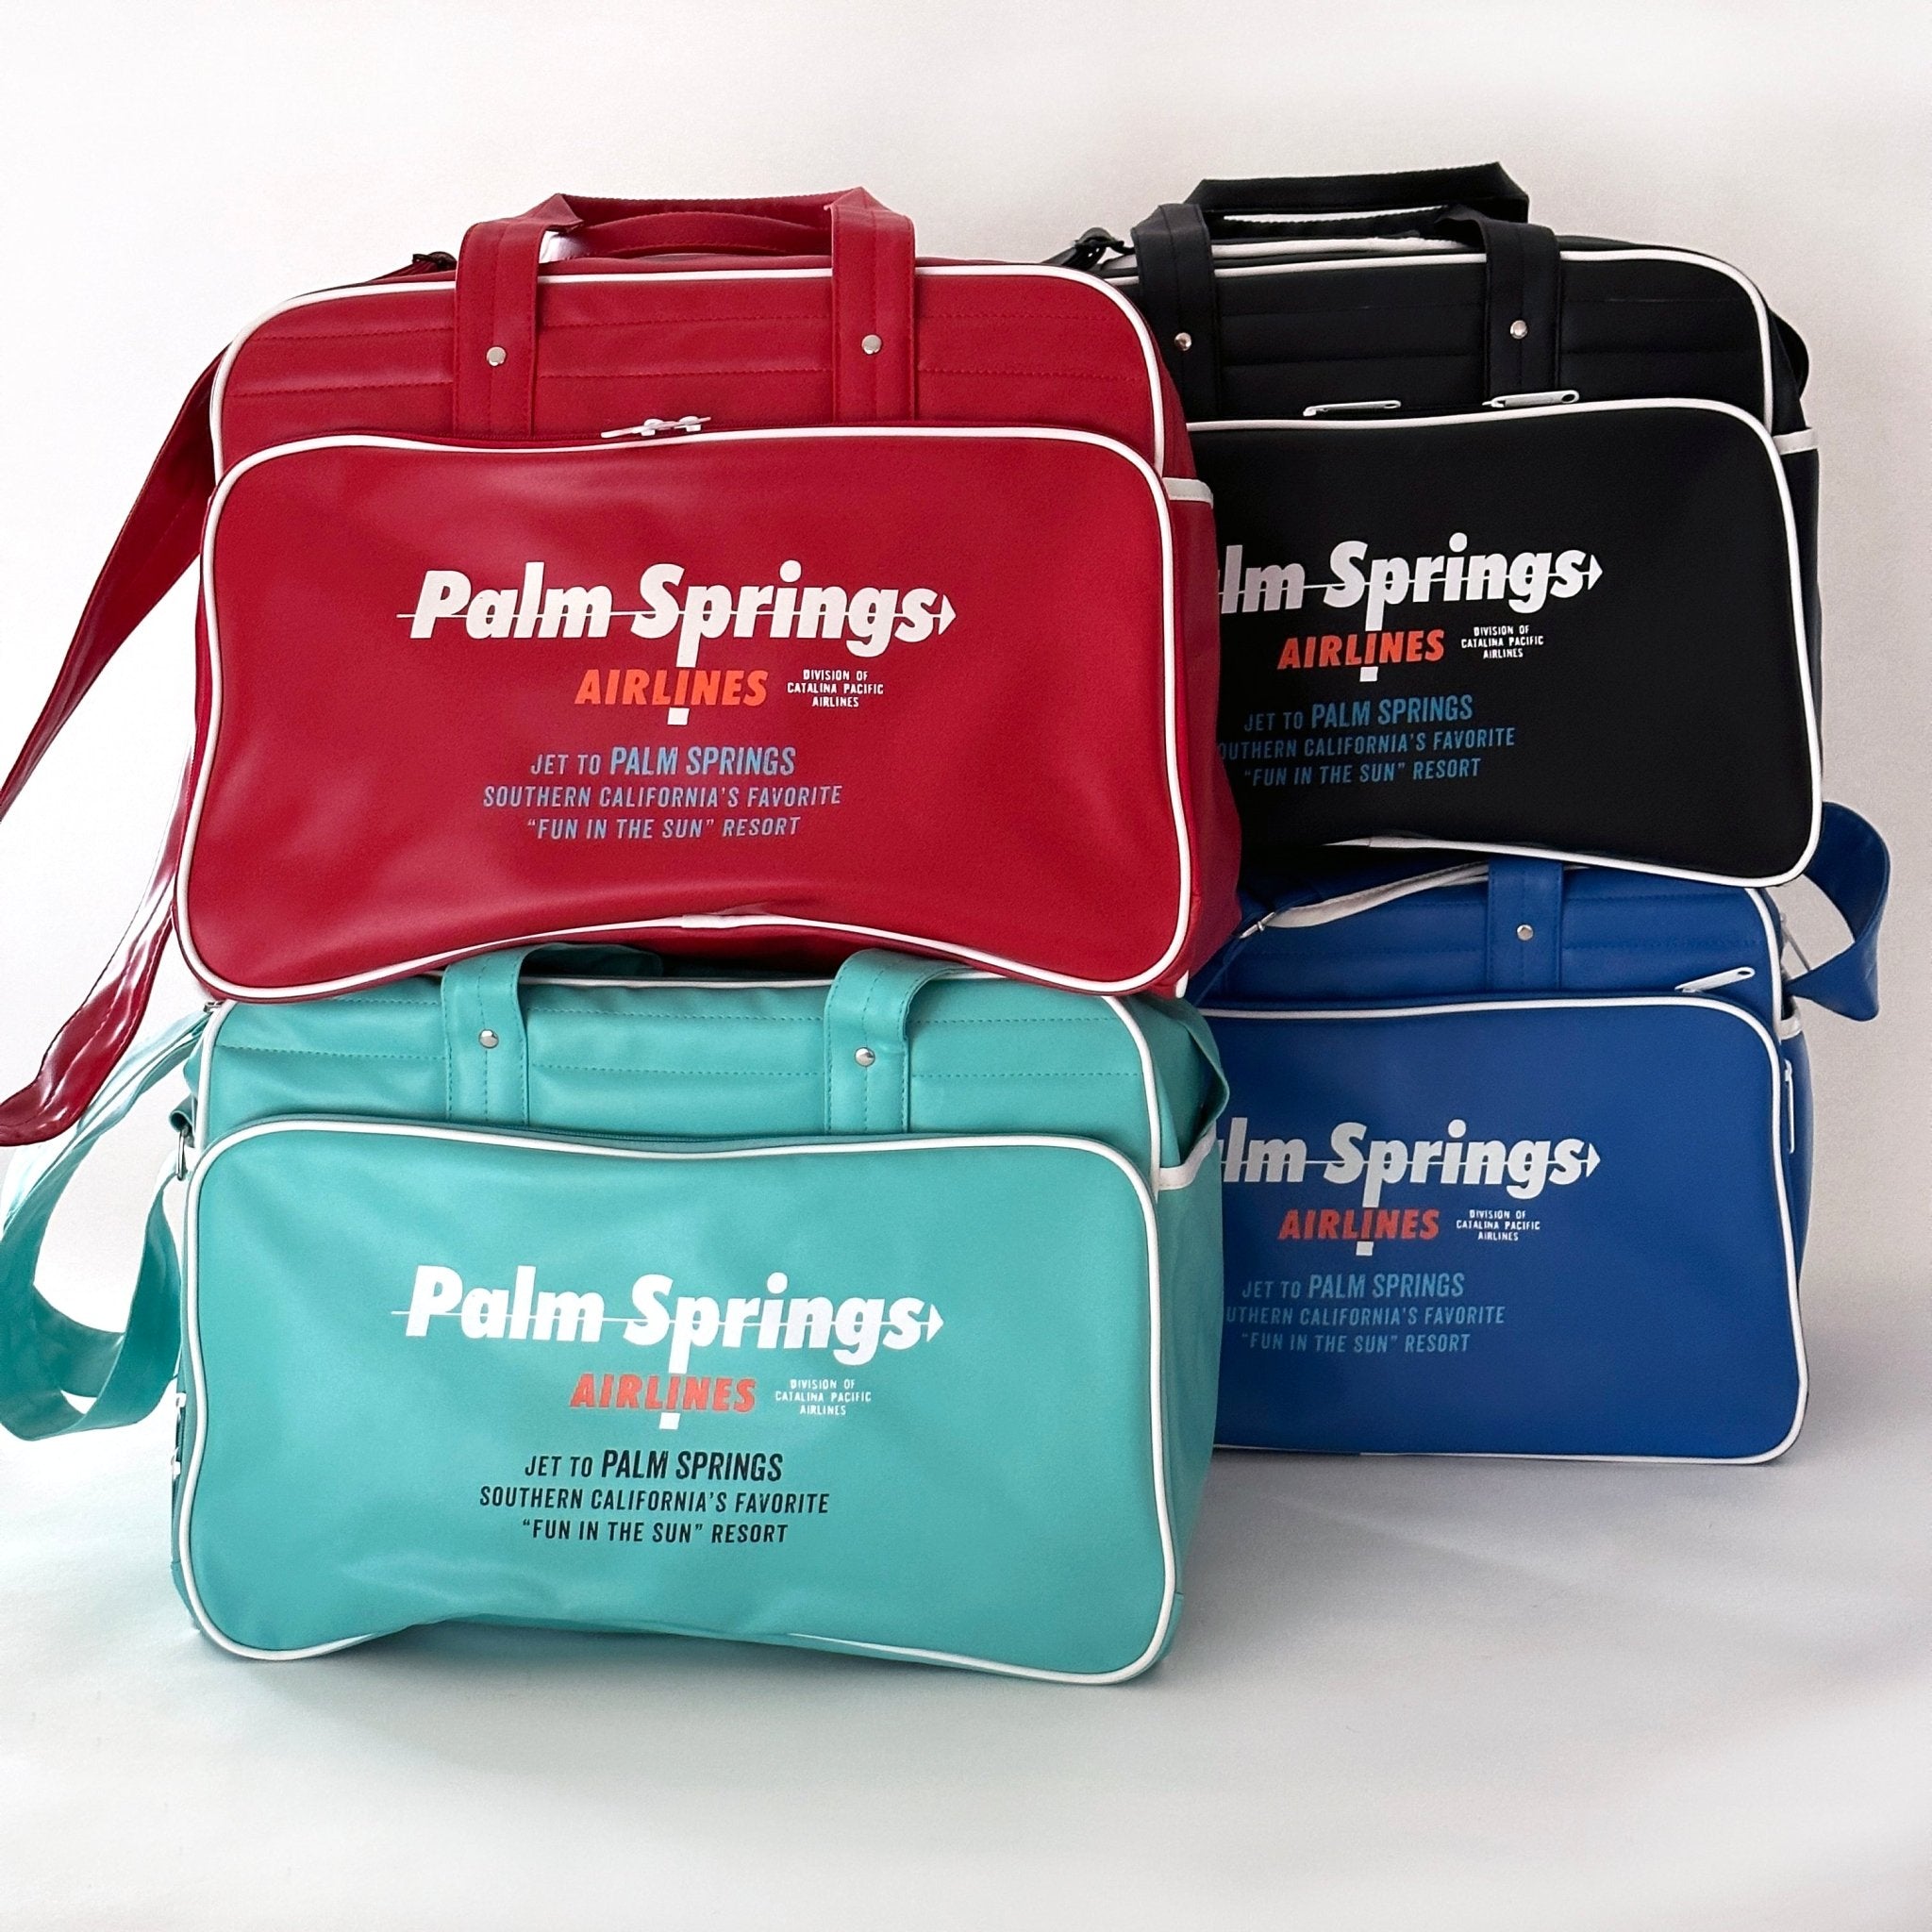 Palm Springs Airlines Weekender Bag - Red - Destination PSP